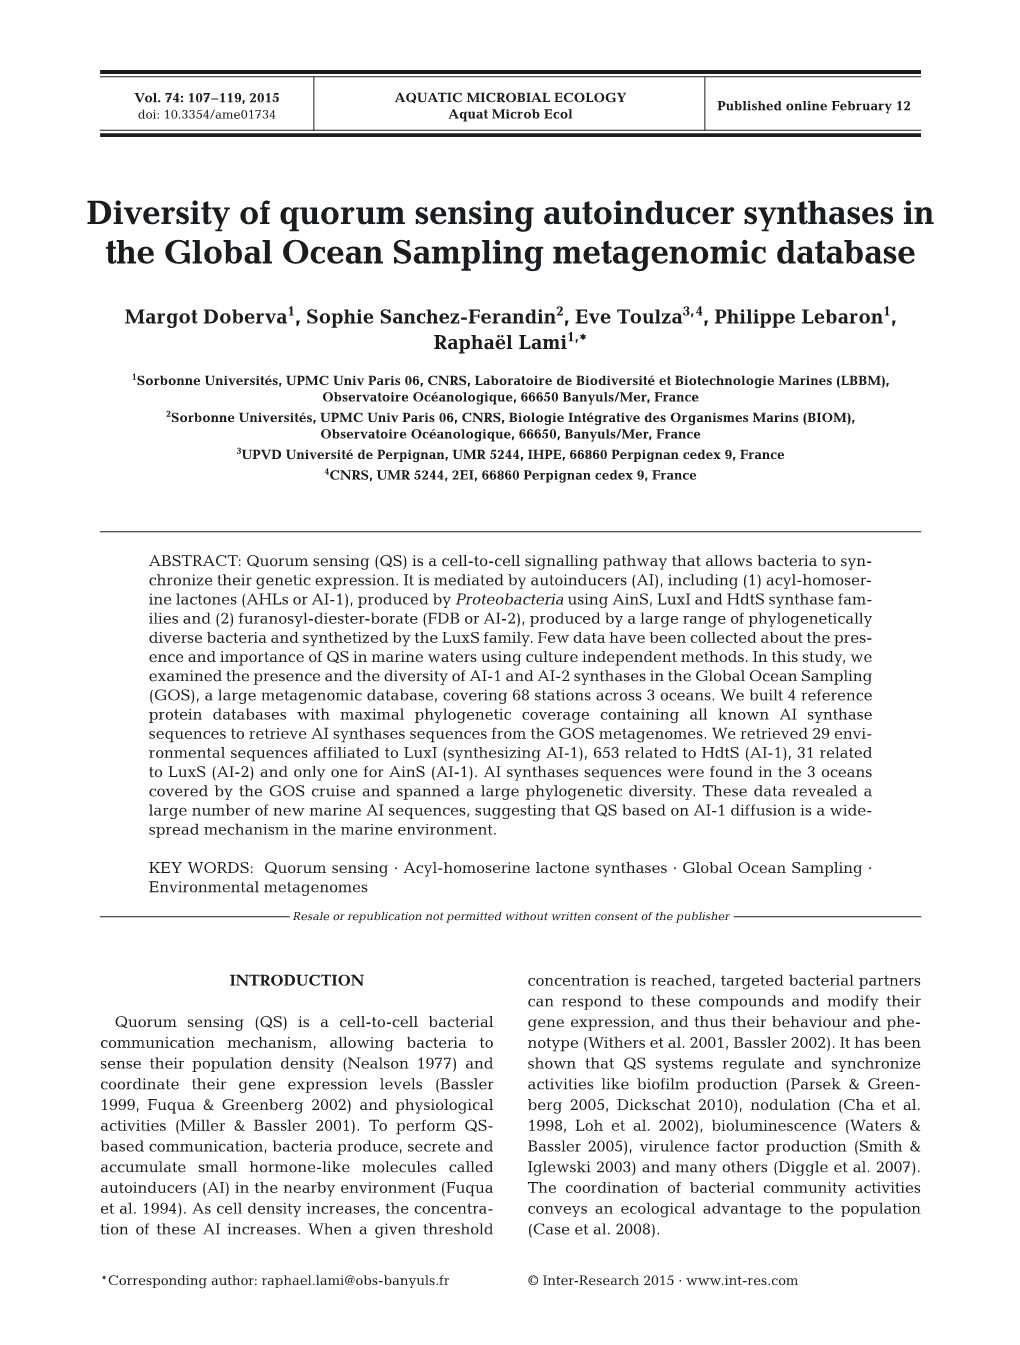 Diversity of Quorum Sensing Autoinducer Synthases in the Global Ocean Sampling Metagenomic Database